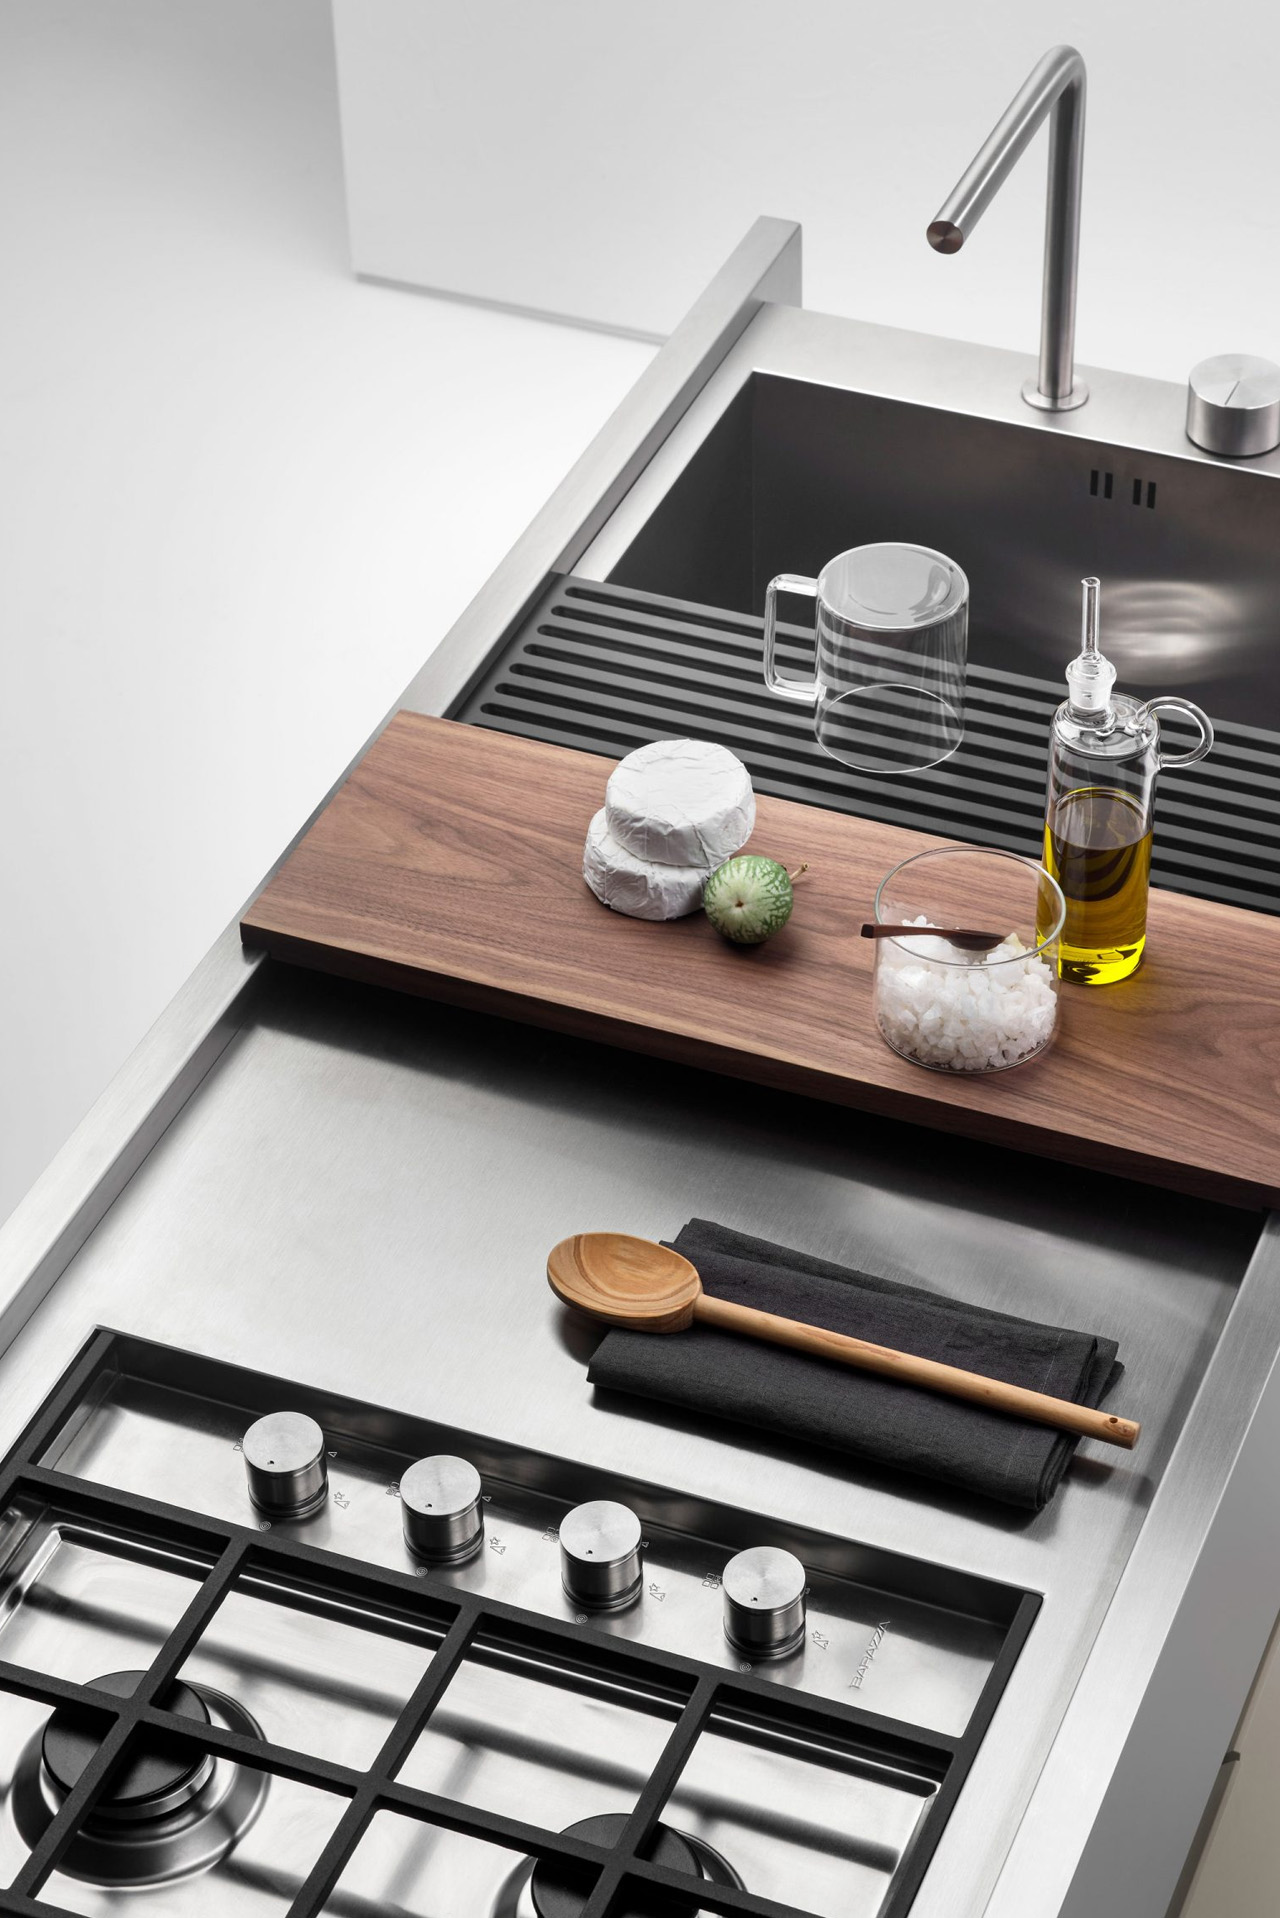 This modern minimal kitchen island is designed to make a tiny kitchen feel luxurious + spacious